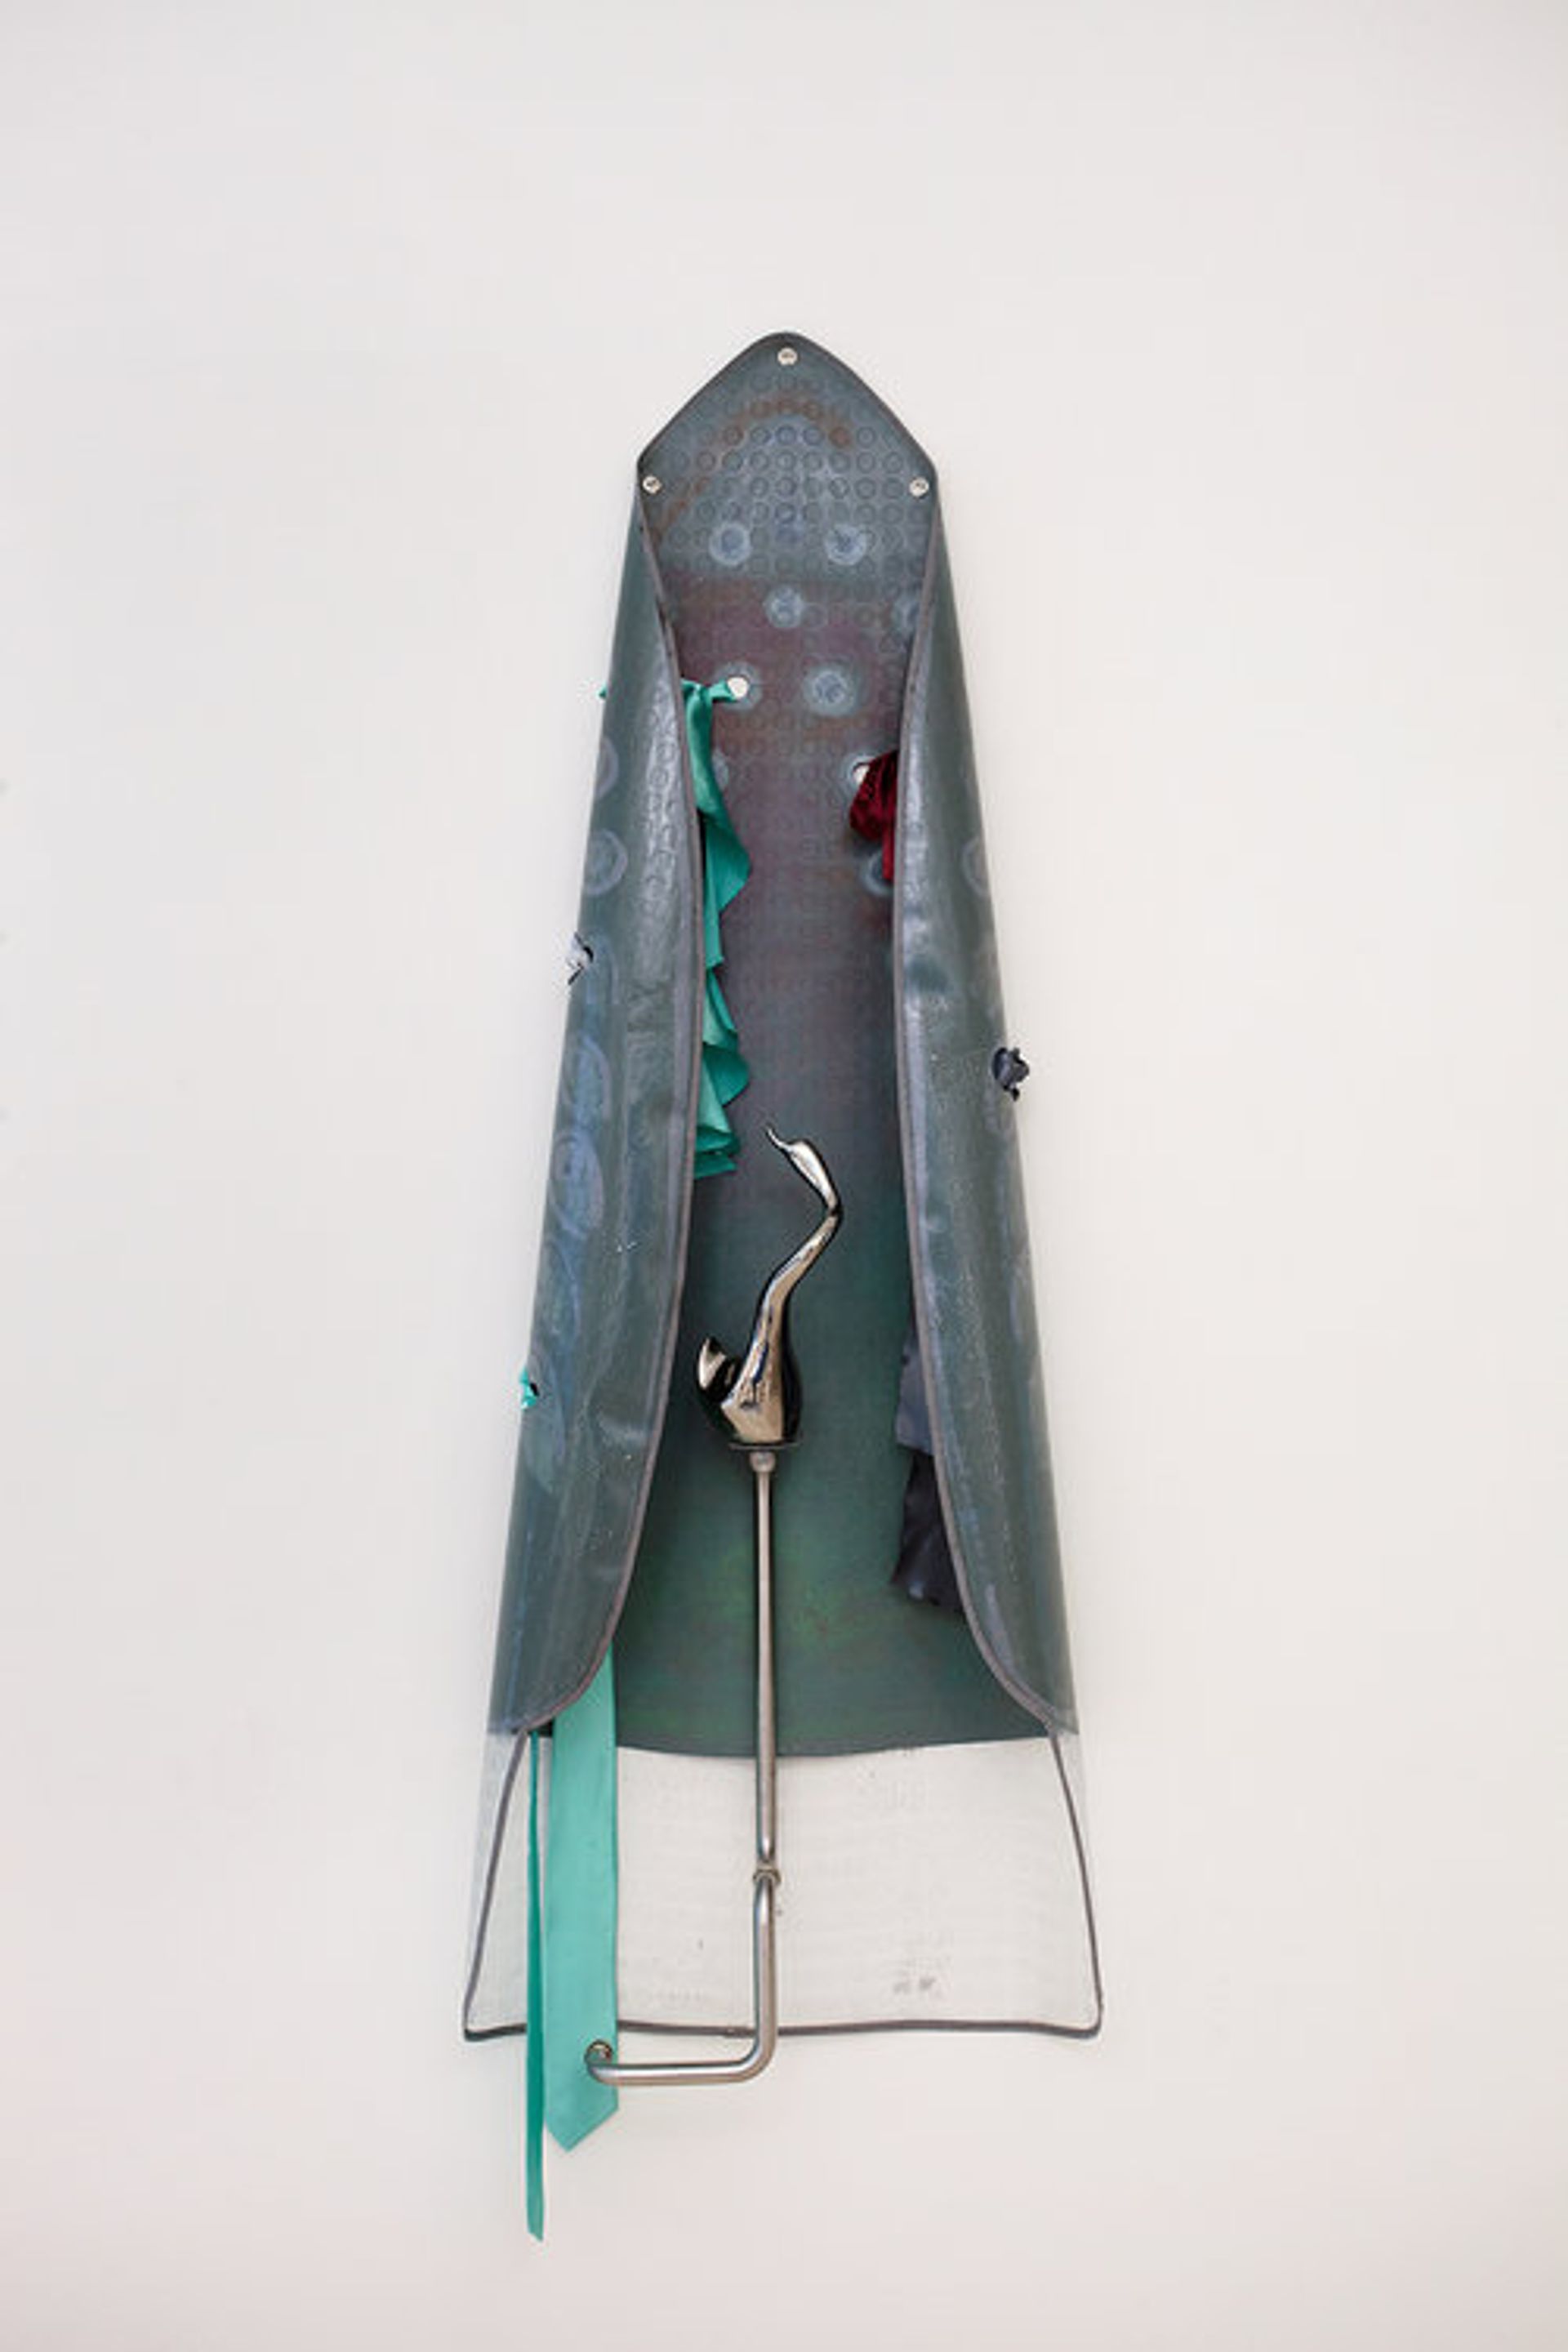 Ana Navas, Iron, 2018, pvc, acrylic, metal, textile, ceramic, 195 × 62 cm